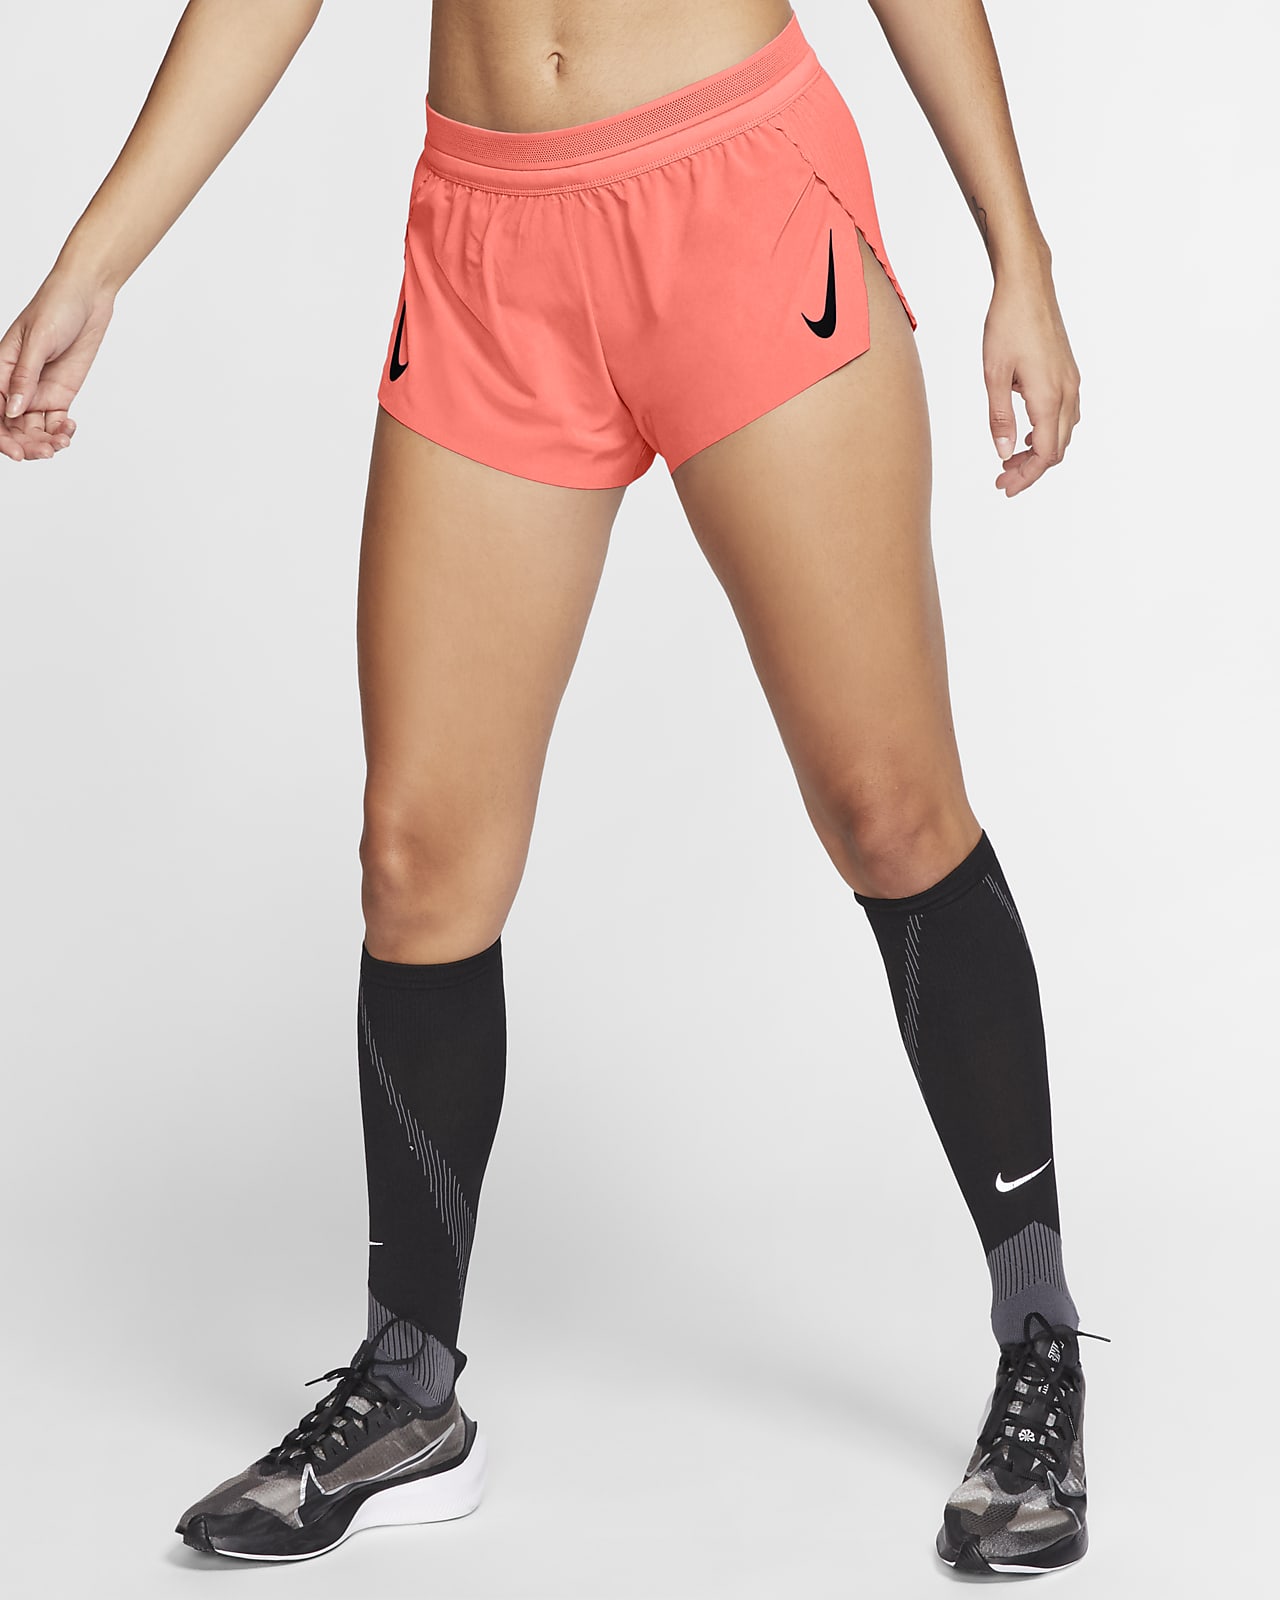 Nike AeroSwift Women's Running Shorts. Nike SG